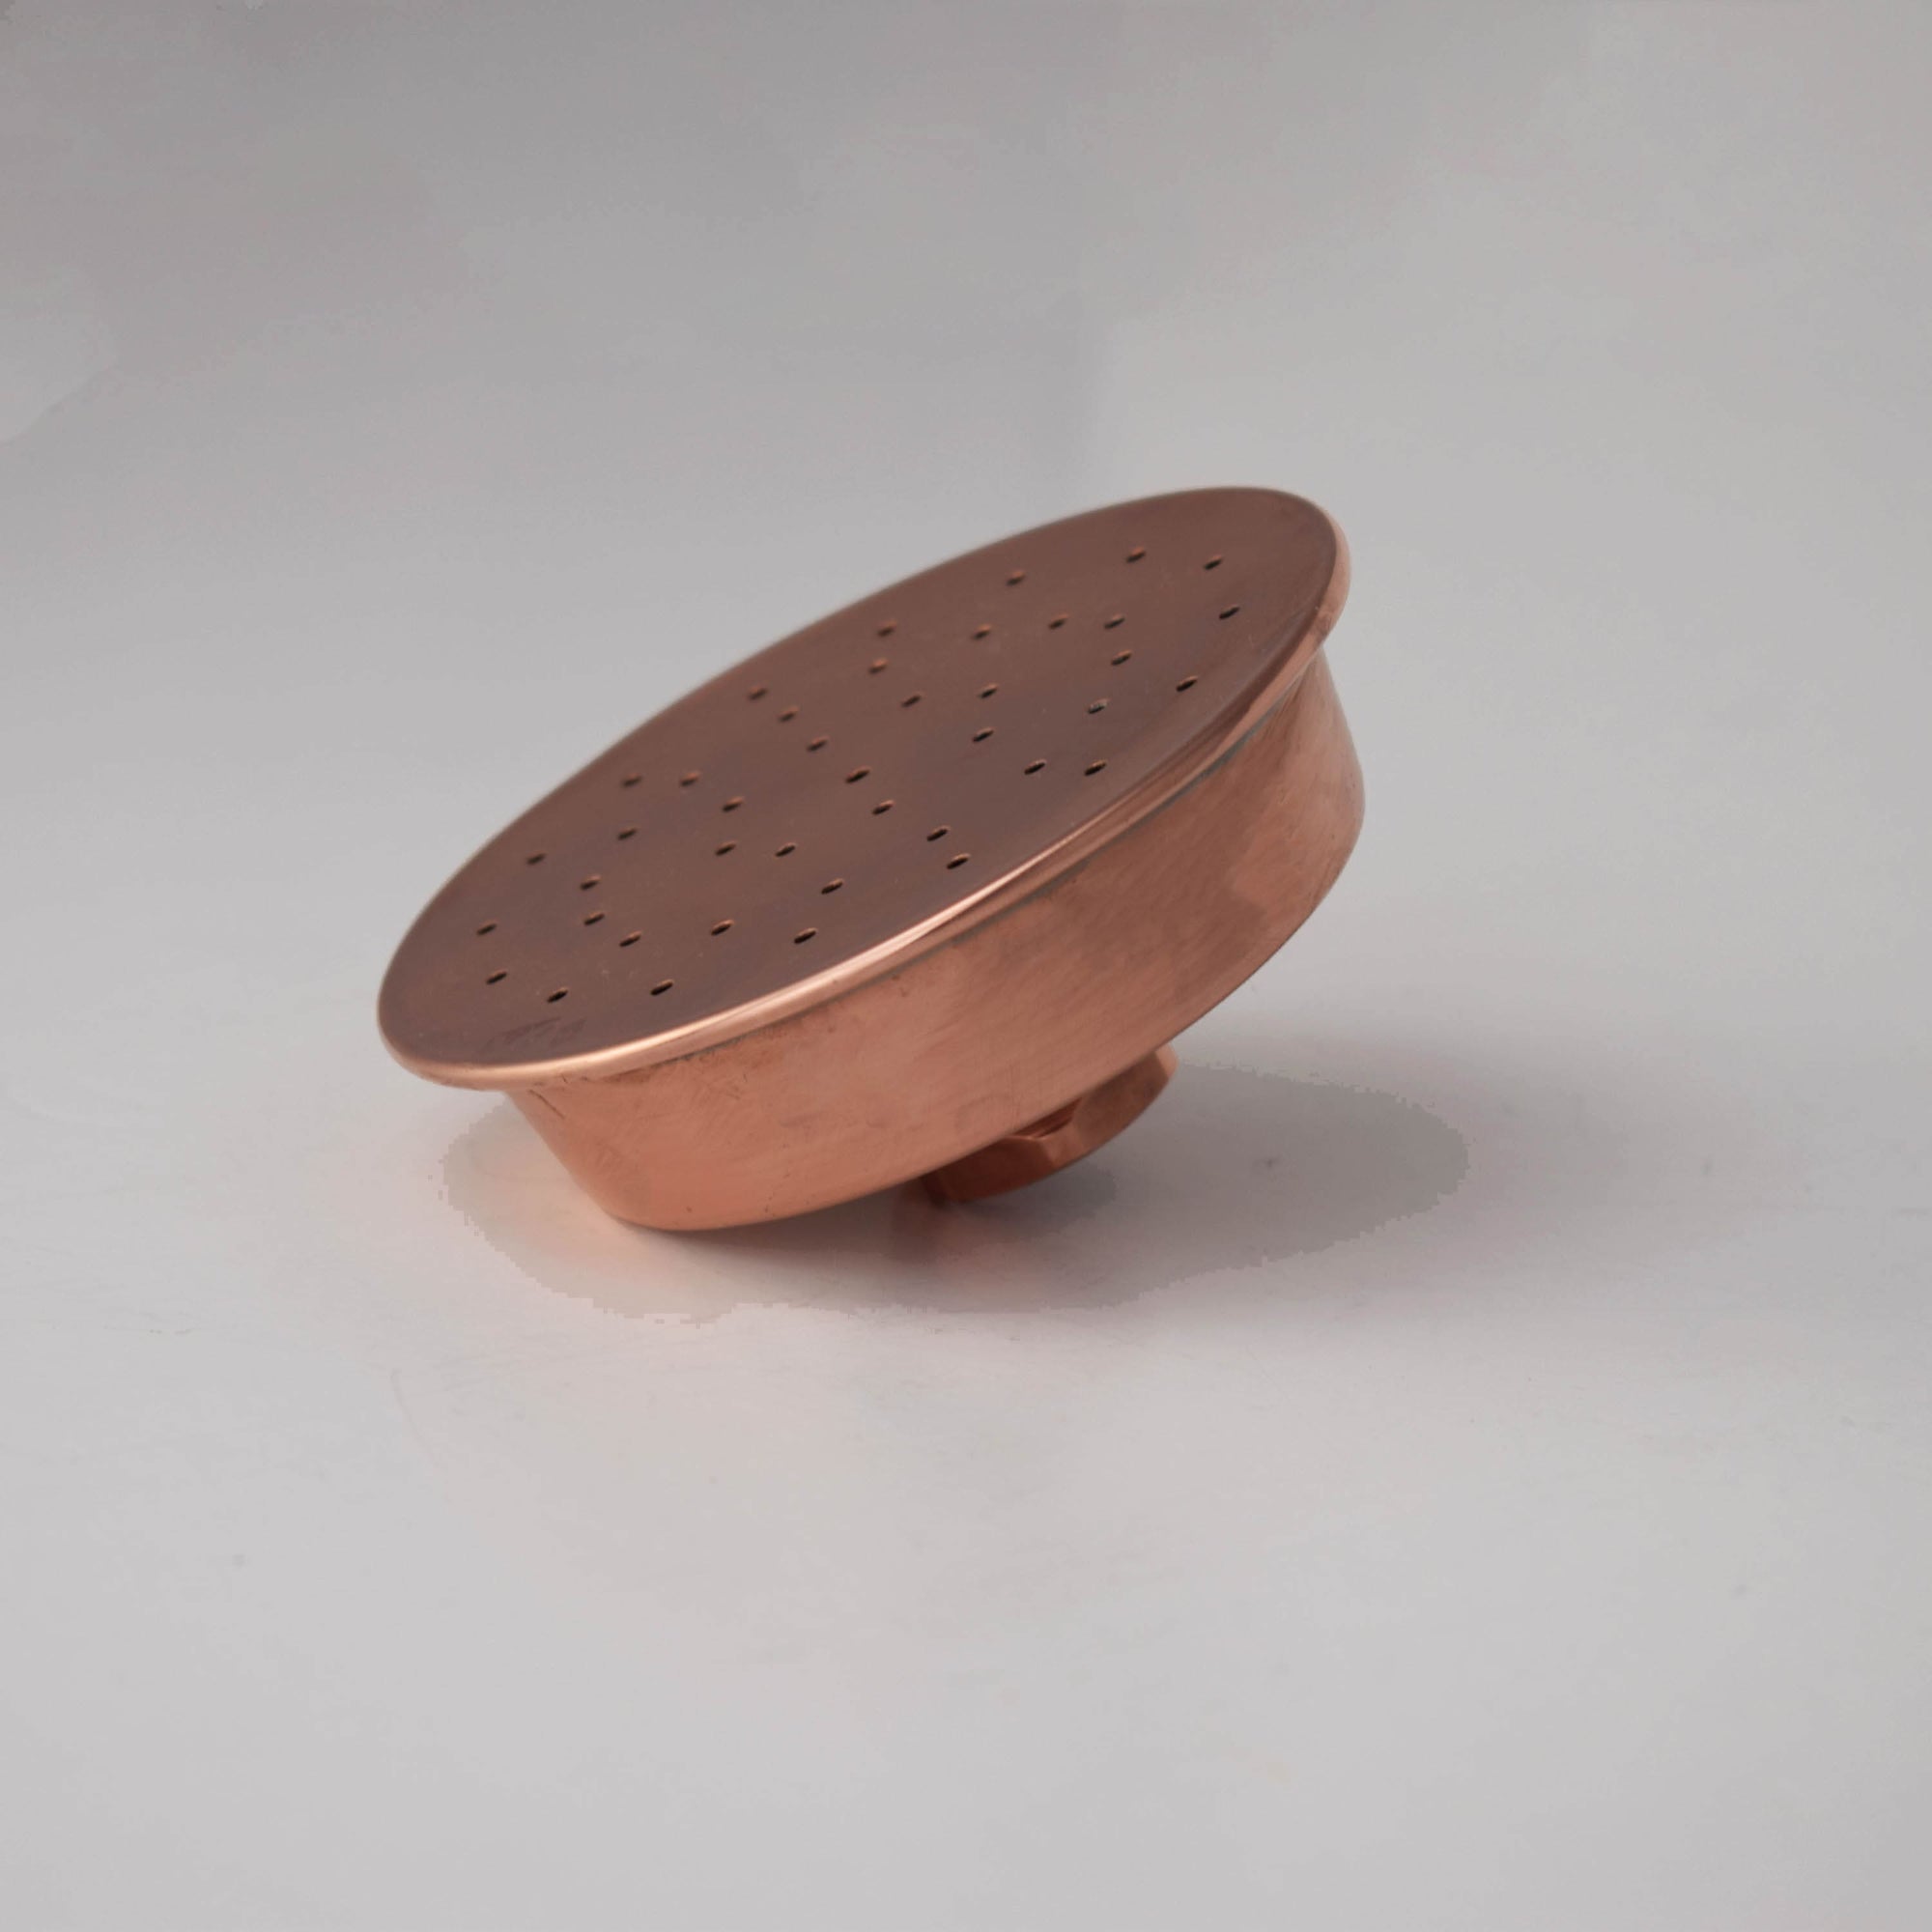 Copper Shower Head - Small Shower Rose - Proper Copper Design handcrafted